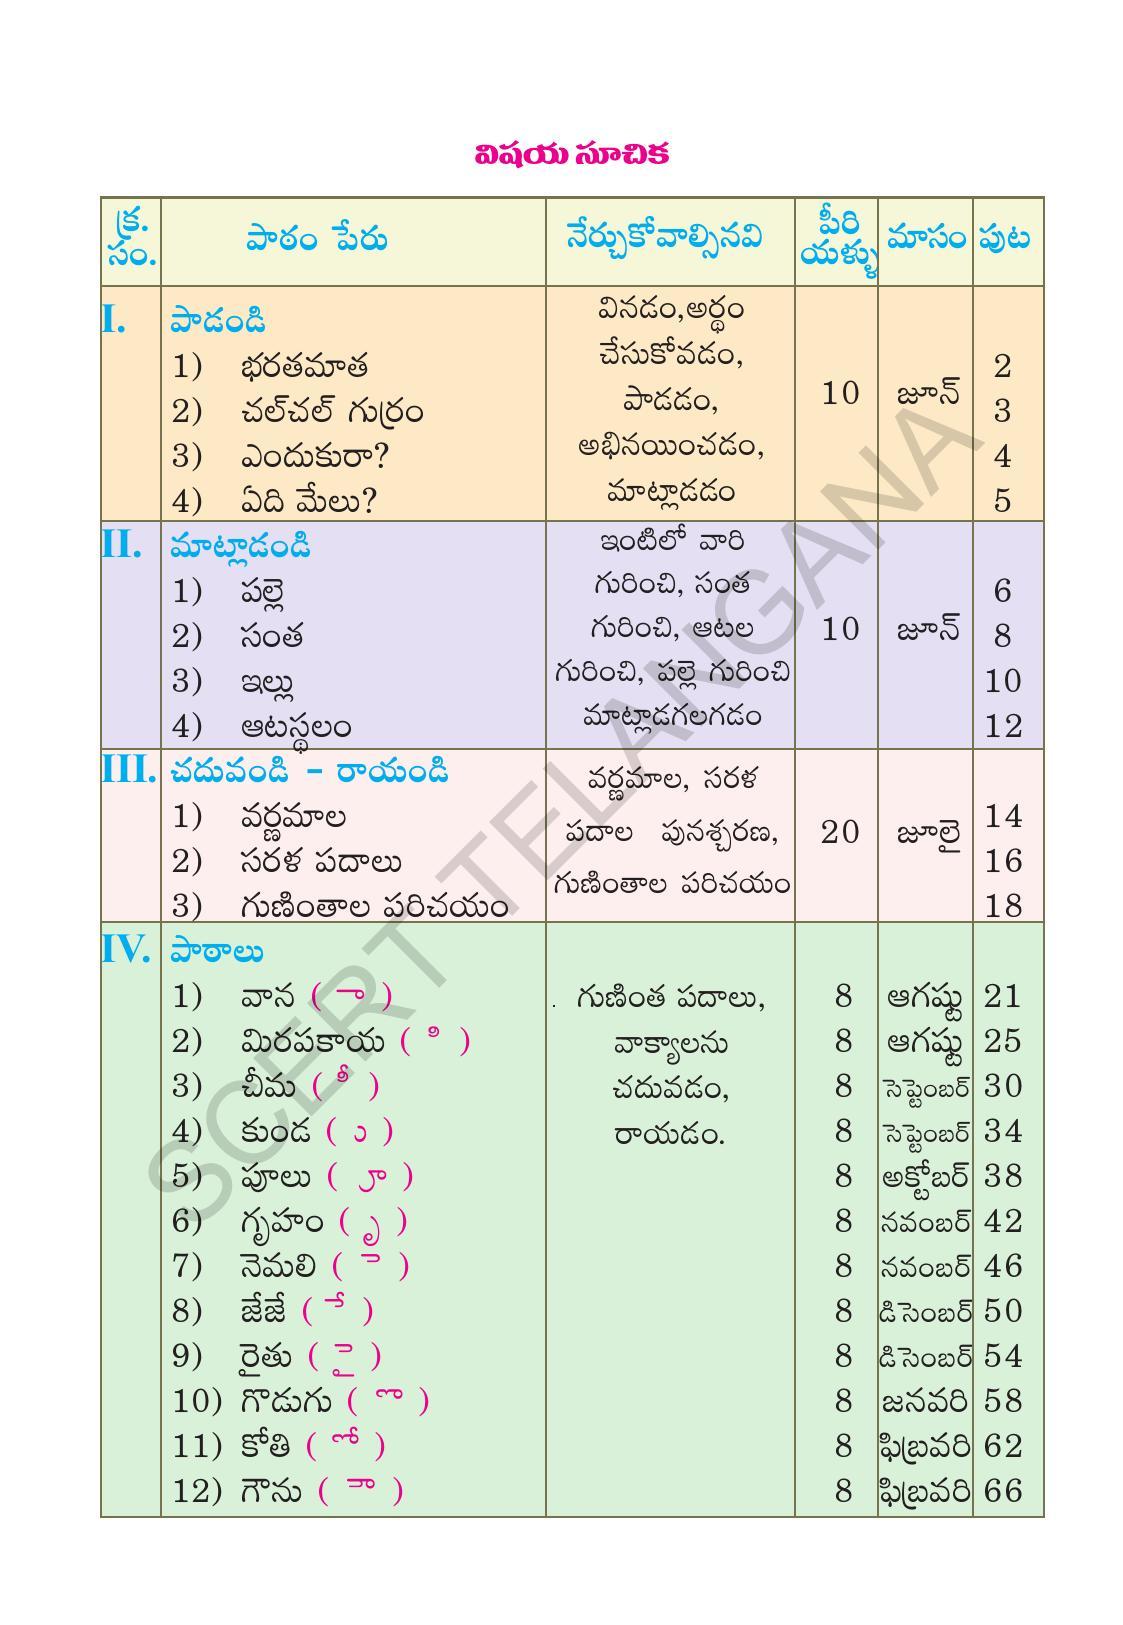 TS SCERT Class 2 Second Language Path 1 (Telugu Medium) Text Book - Page 11